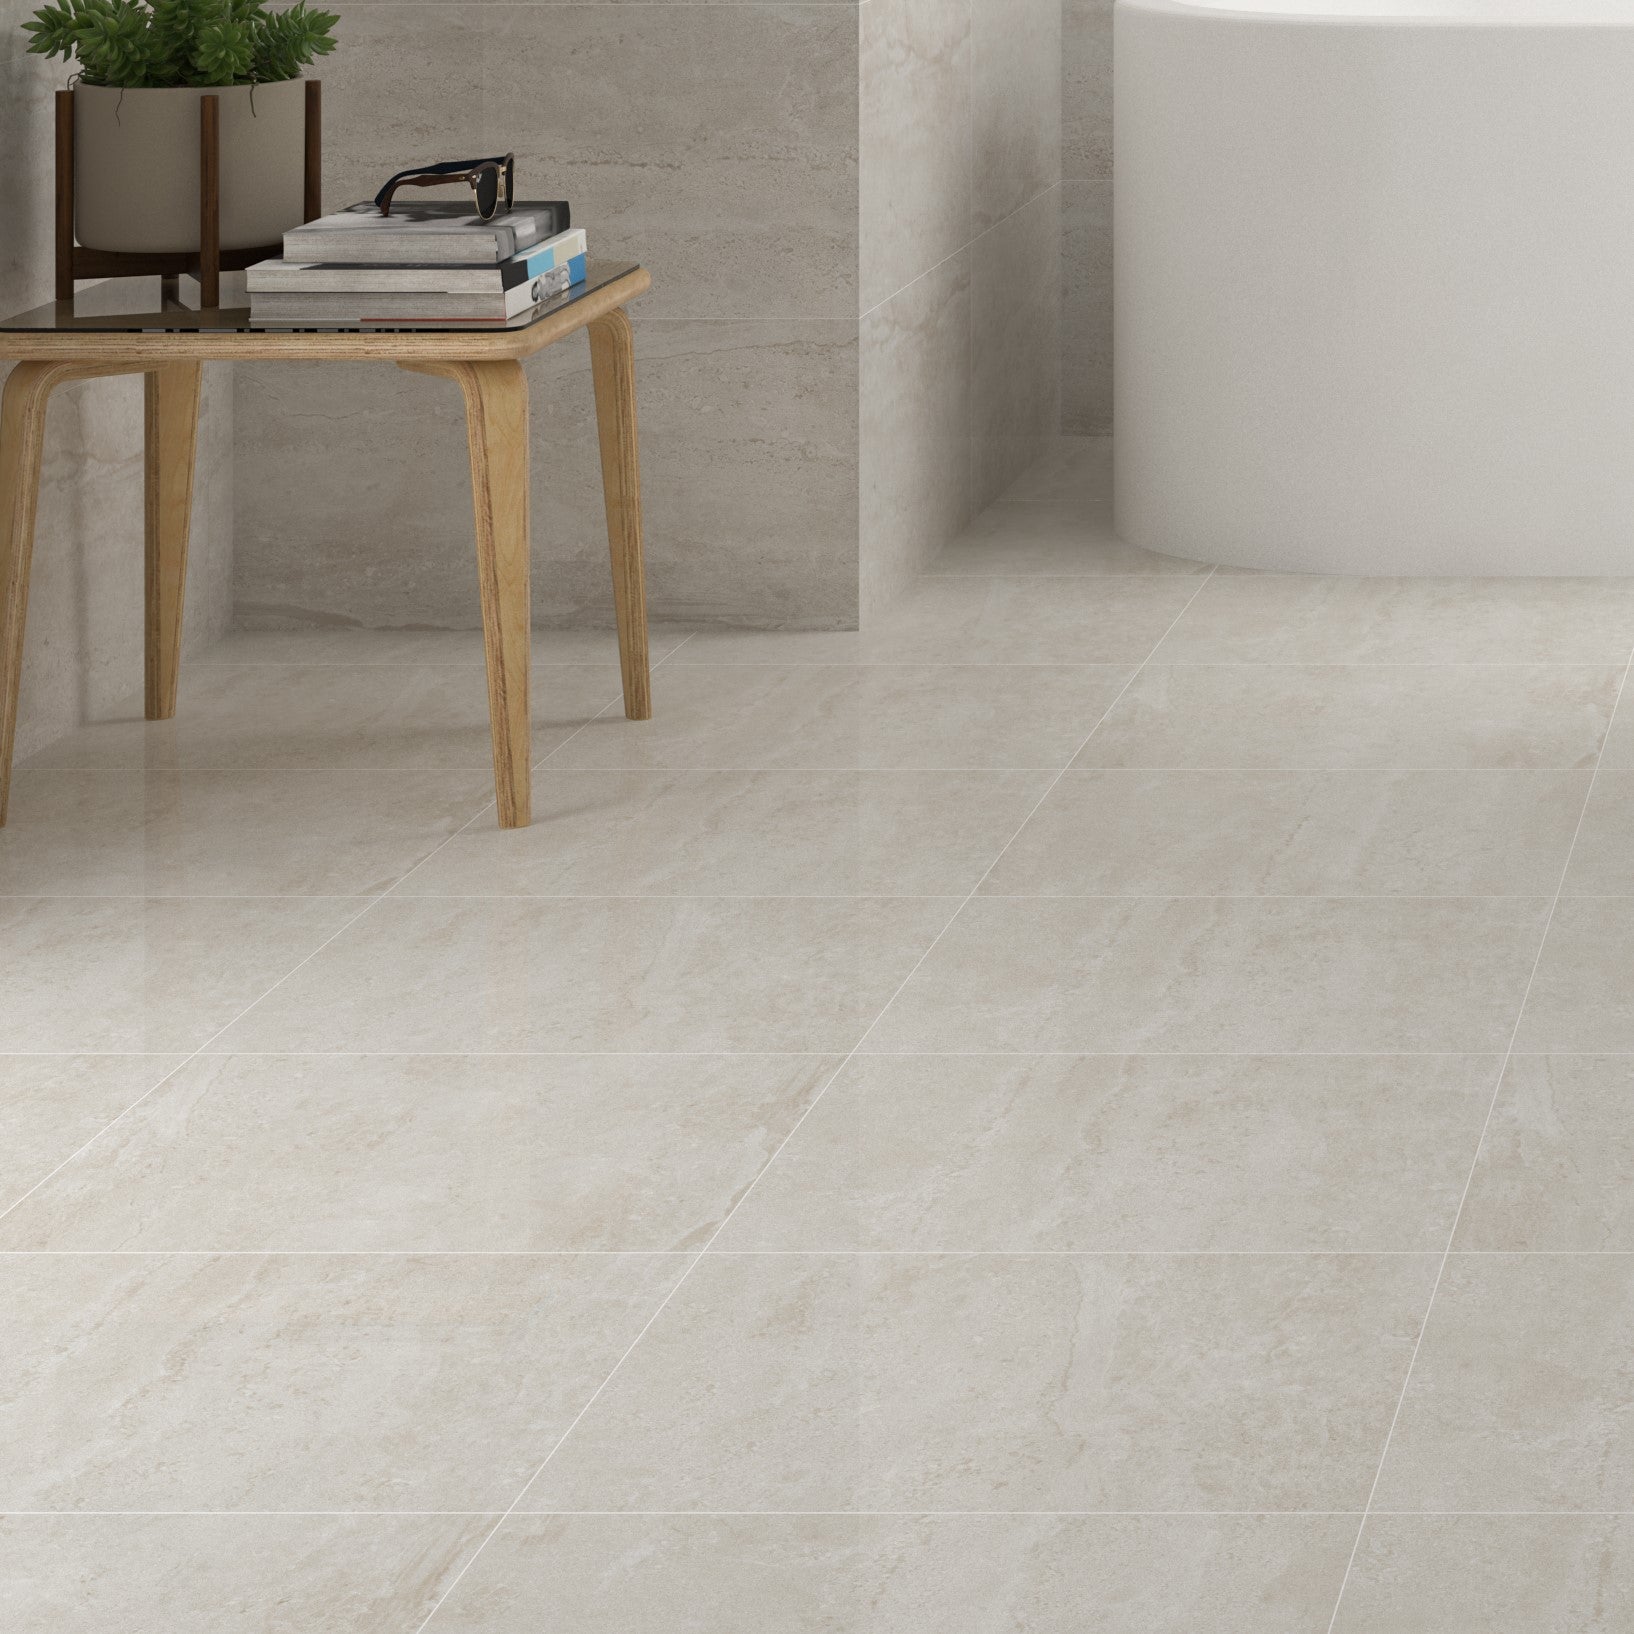 Santino Beige Floor Tile - 45 x 45cm